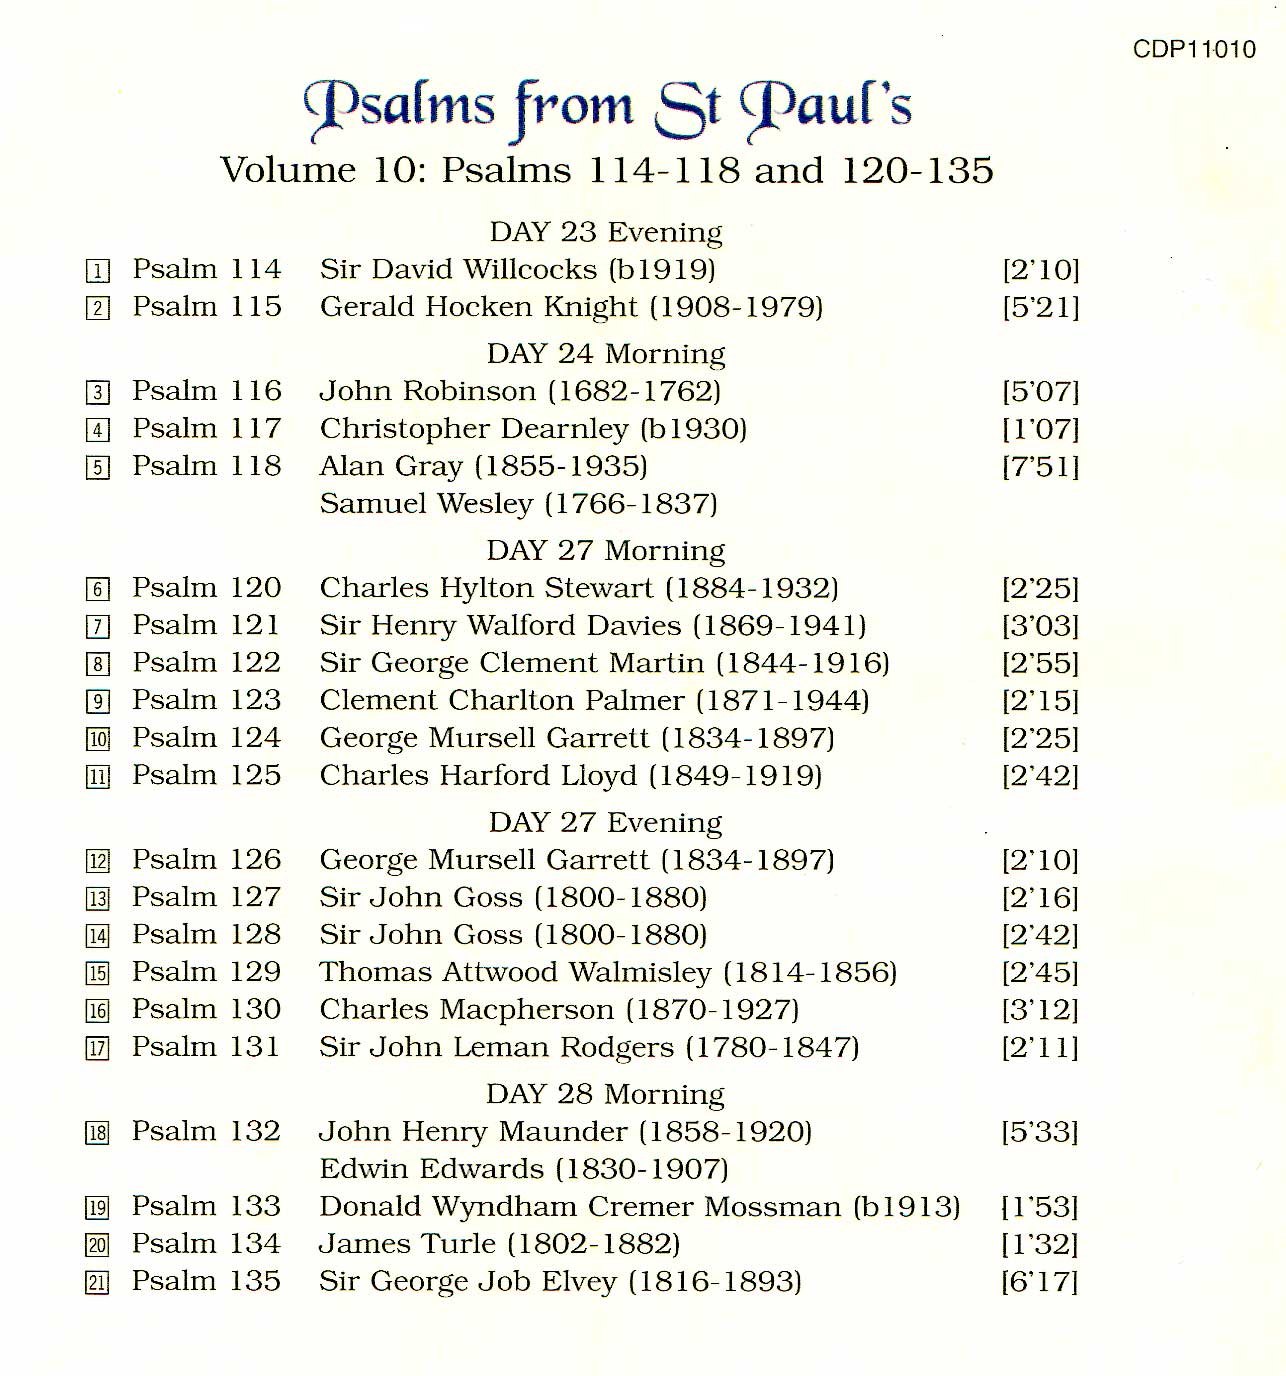 CD back card "Psalms from St Paul's" - Volume 10